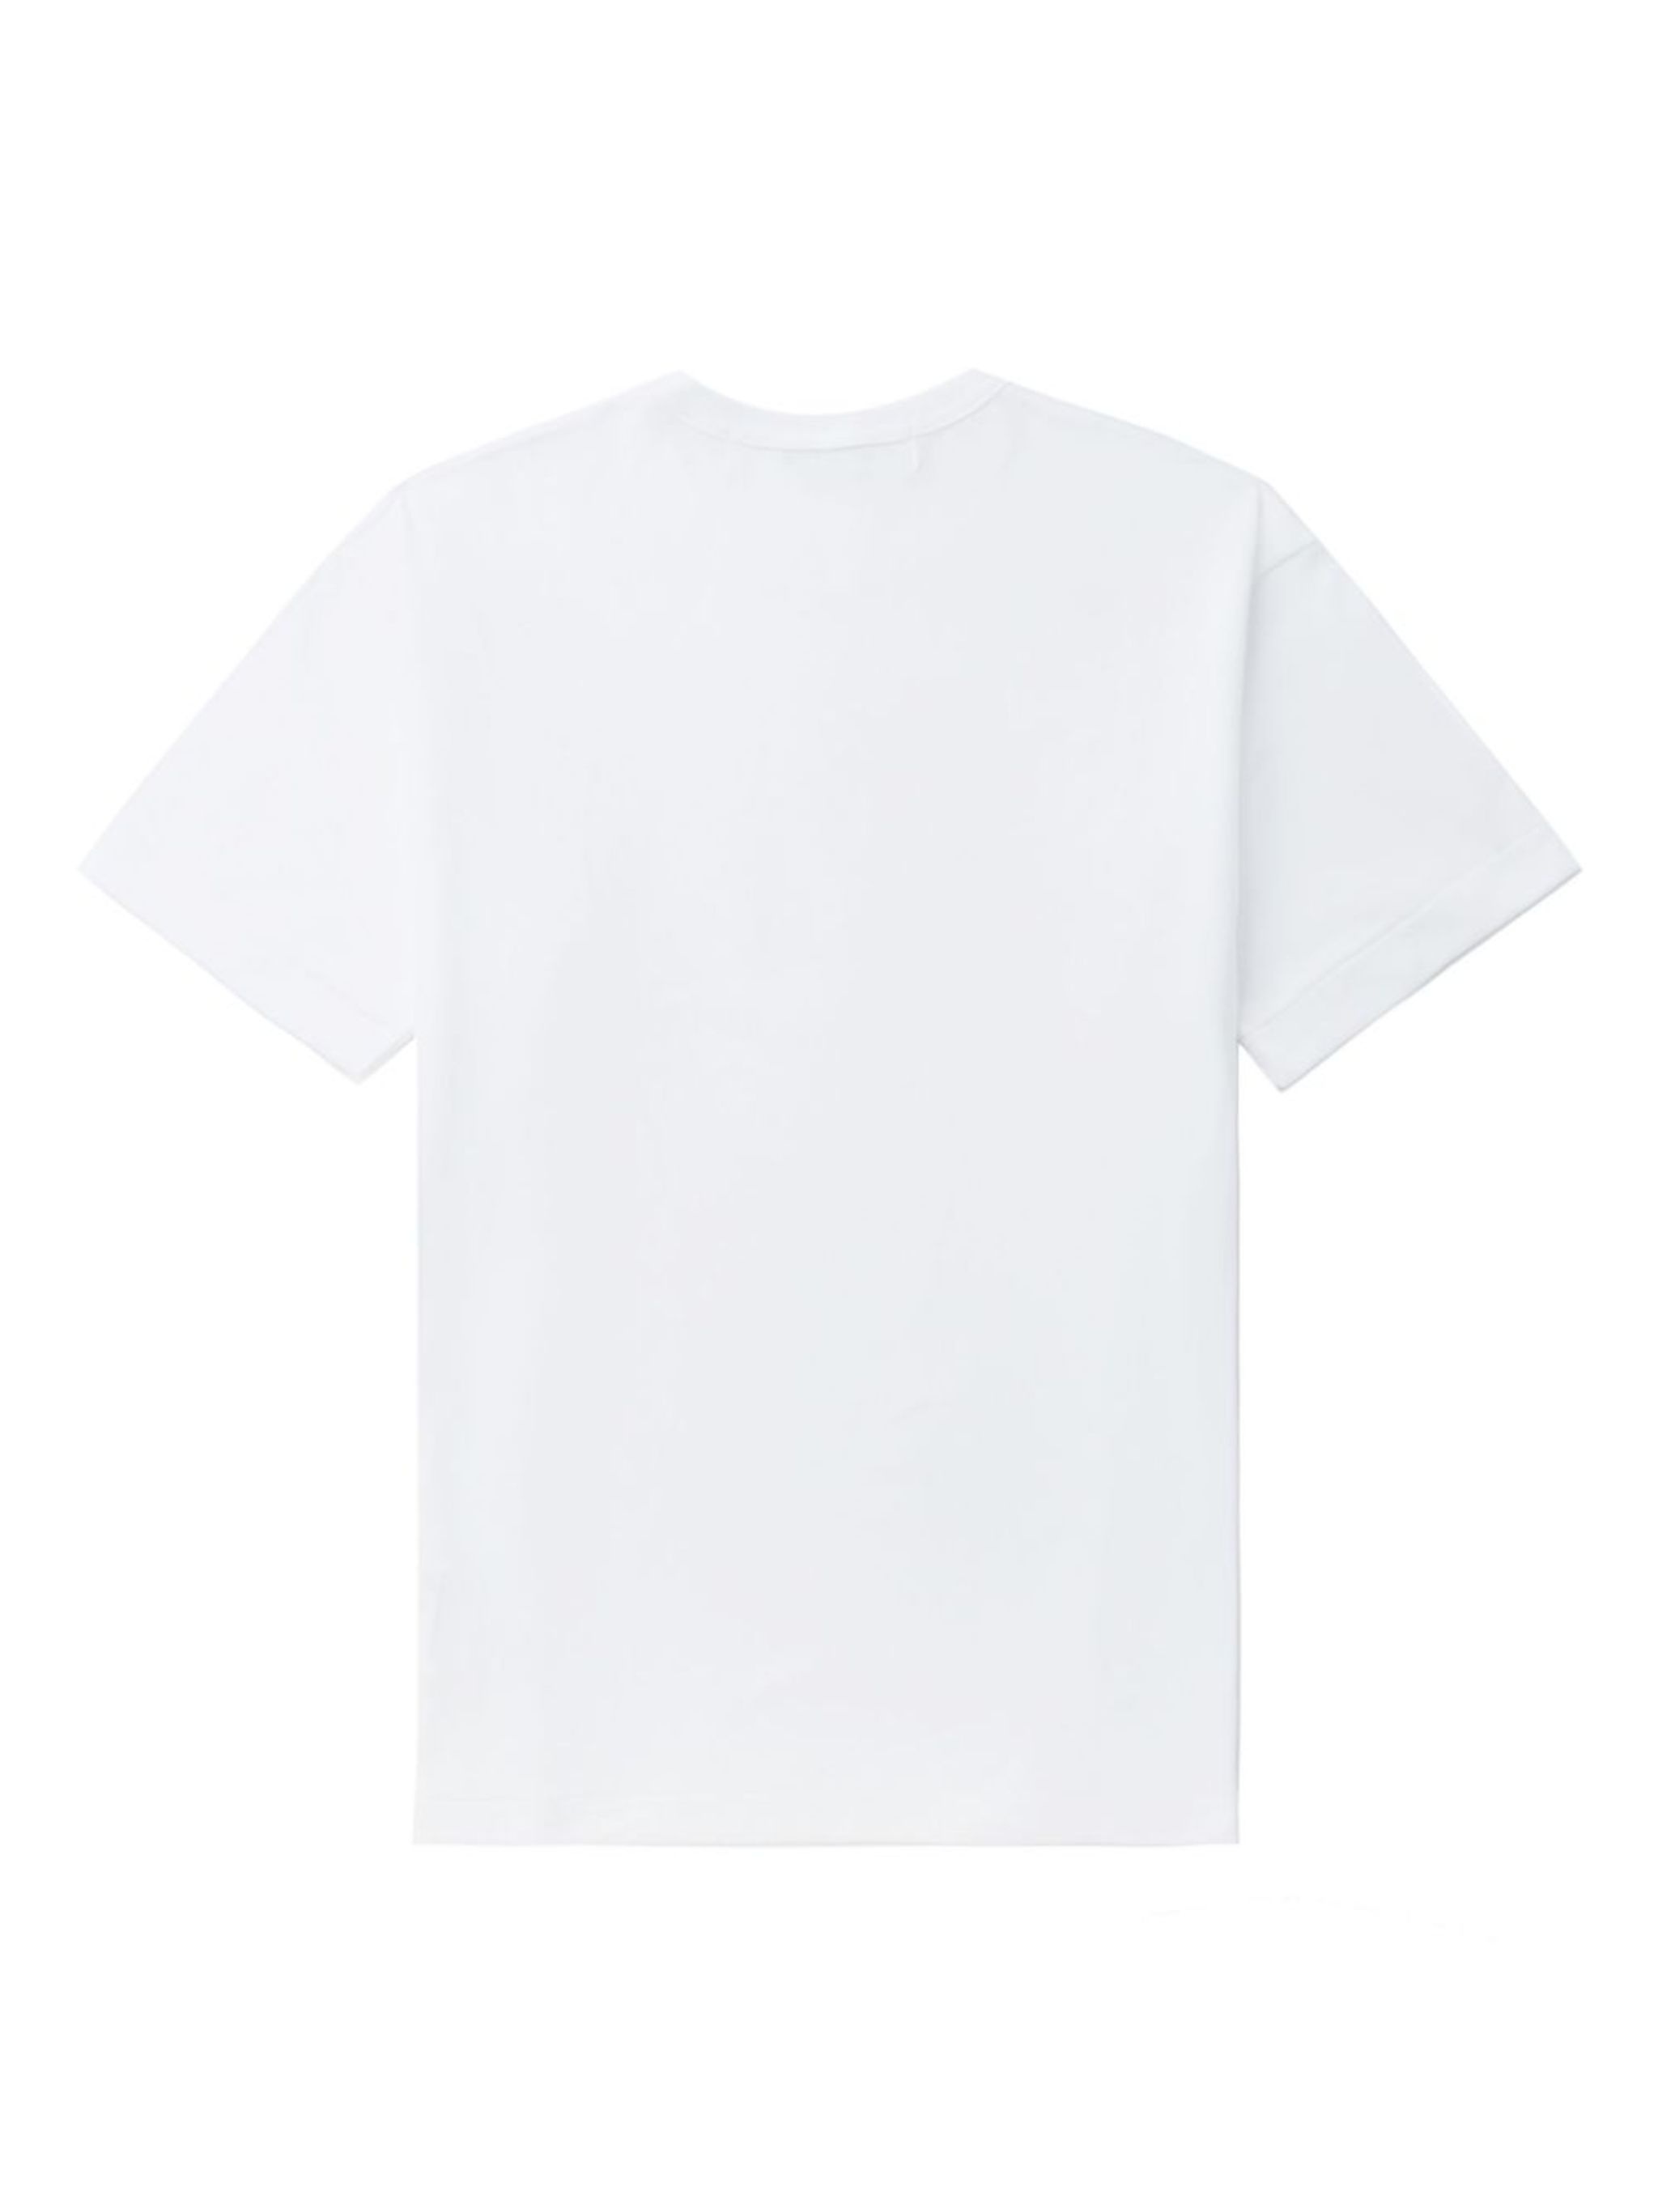 Triple Hearts cotton T-shirt - 7